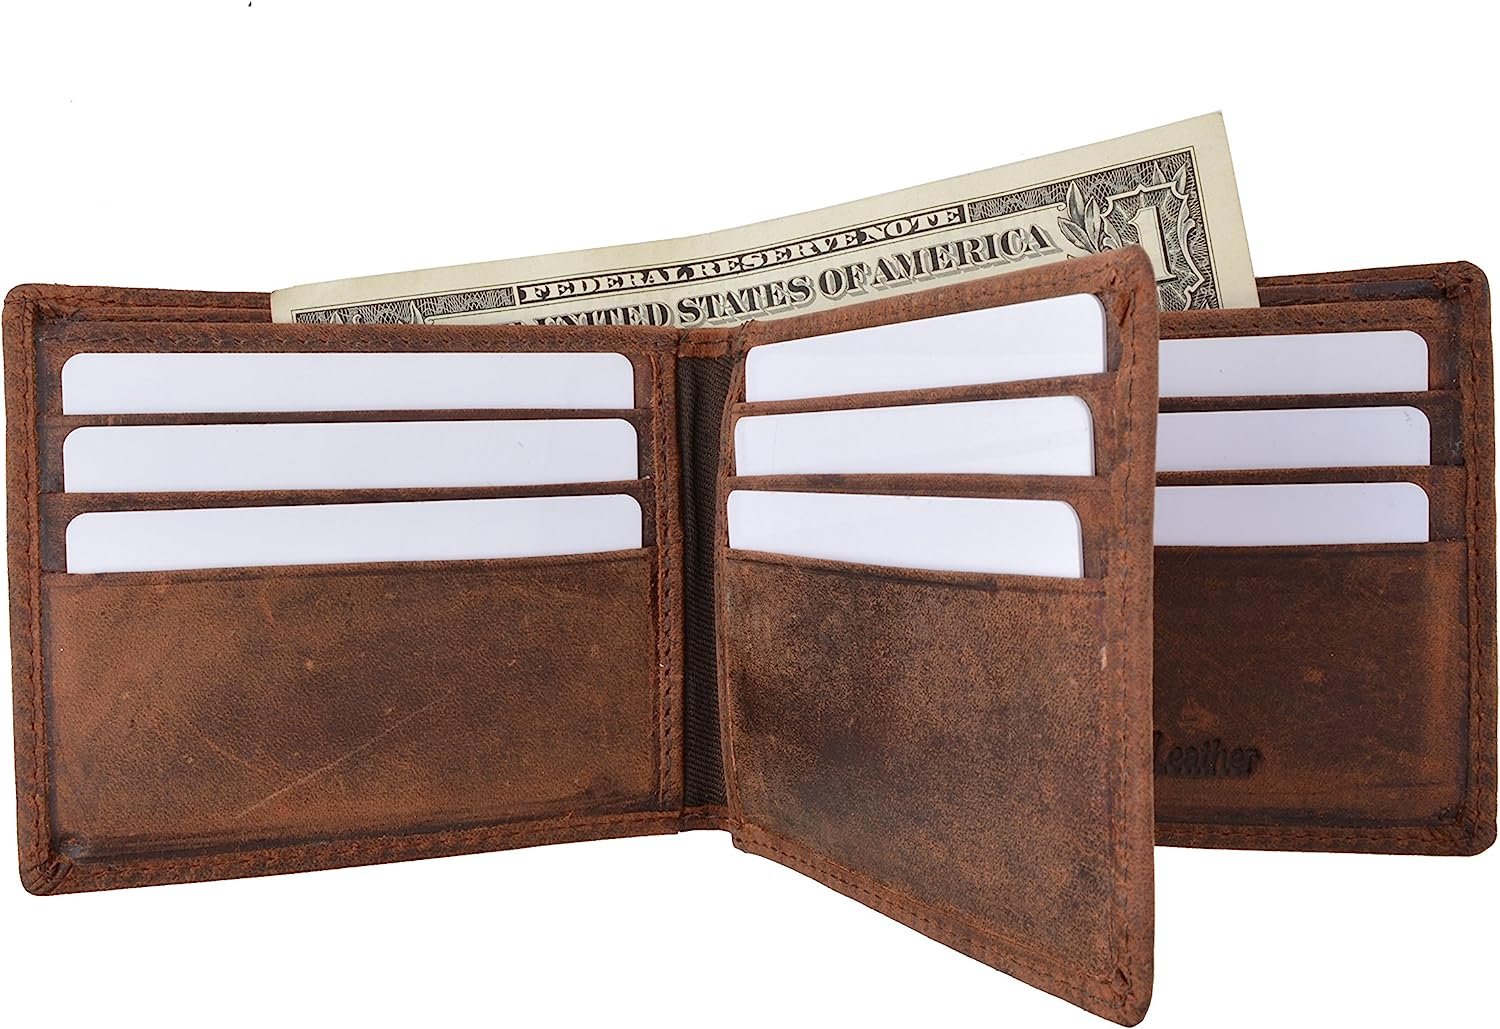 Men's Vintage Genuine Leather Customized Wallet Rfid Blocking Card